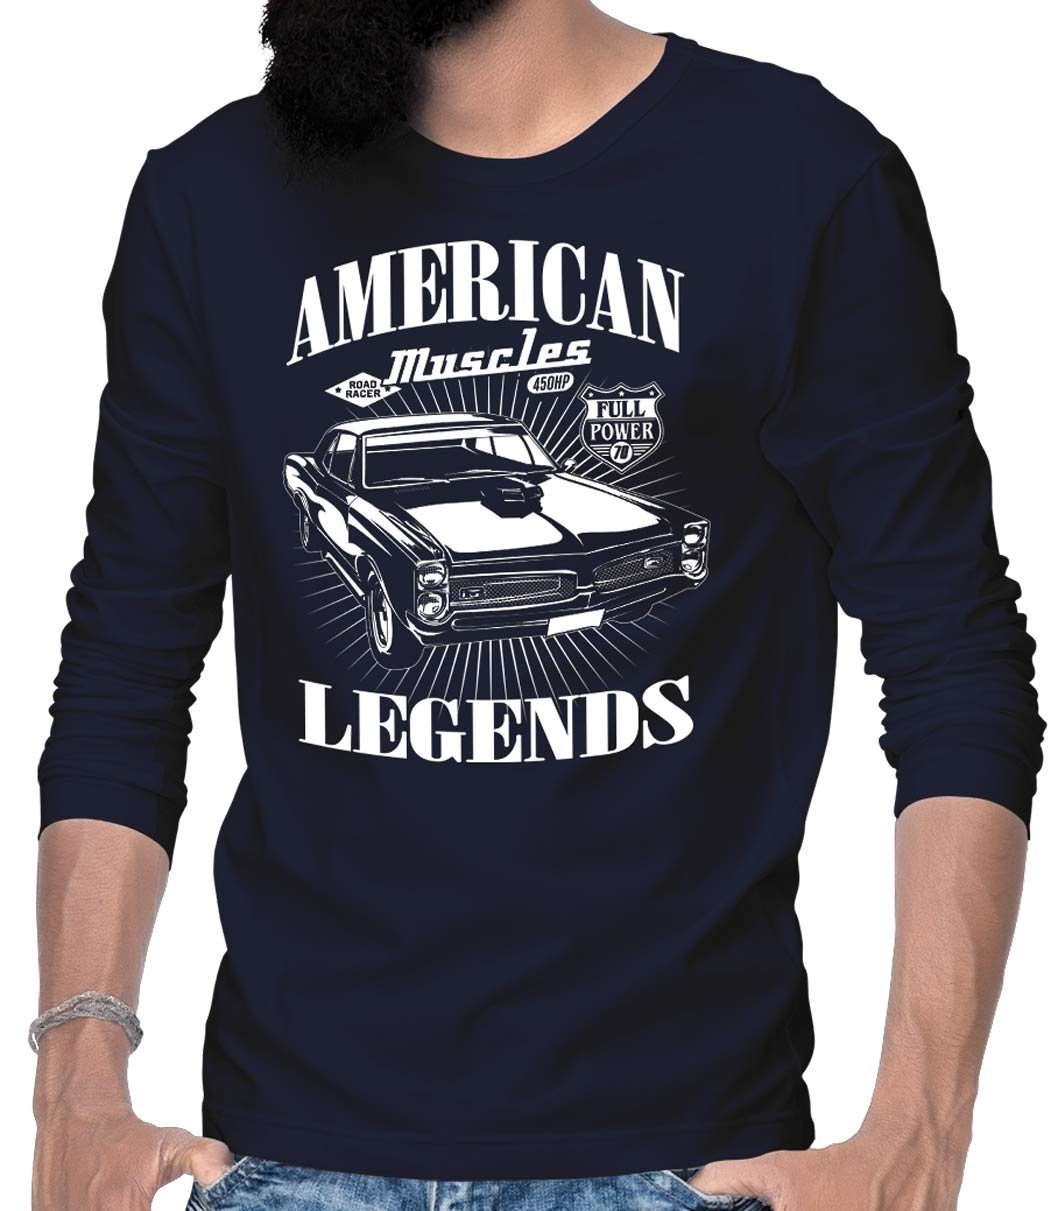 Wheels Longsleeve / T-Shirt Legend Motiv Muscle mit Auto Langarm Car Herren Rebel US-Car Blau On American